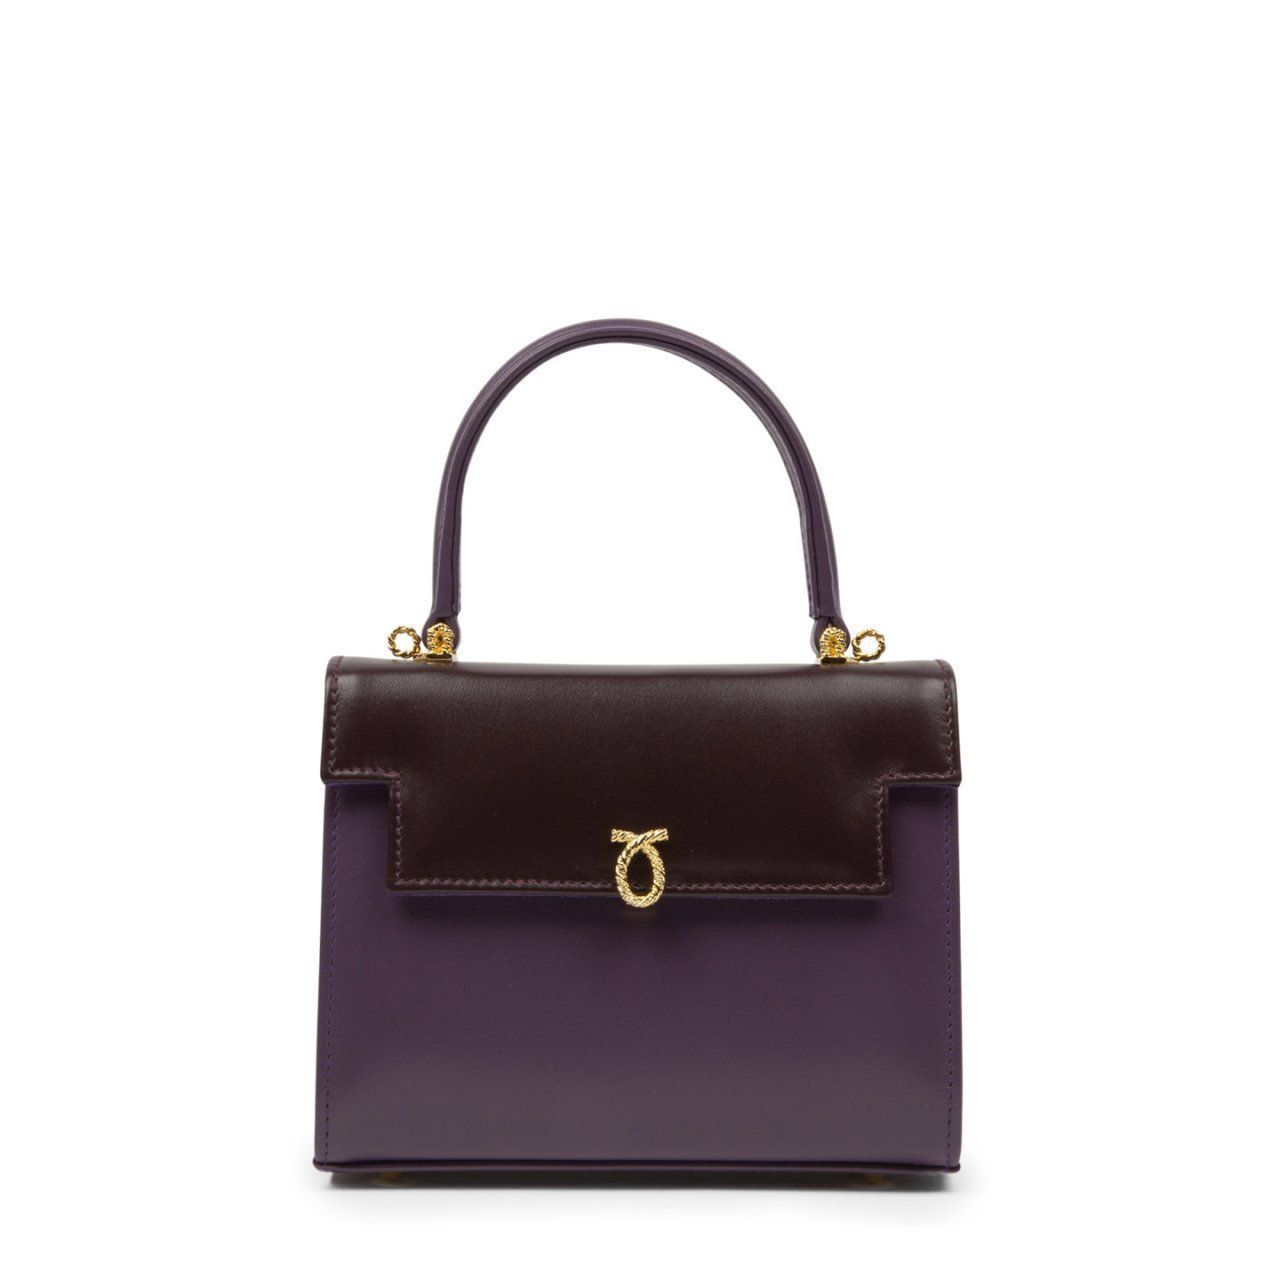 Launer Handbags: Launer London Customizable Adagio Handbag